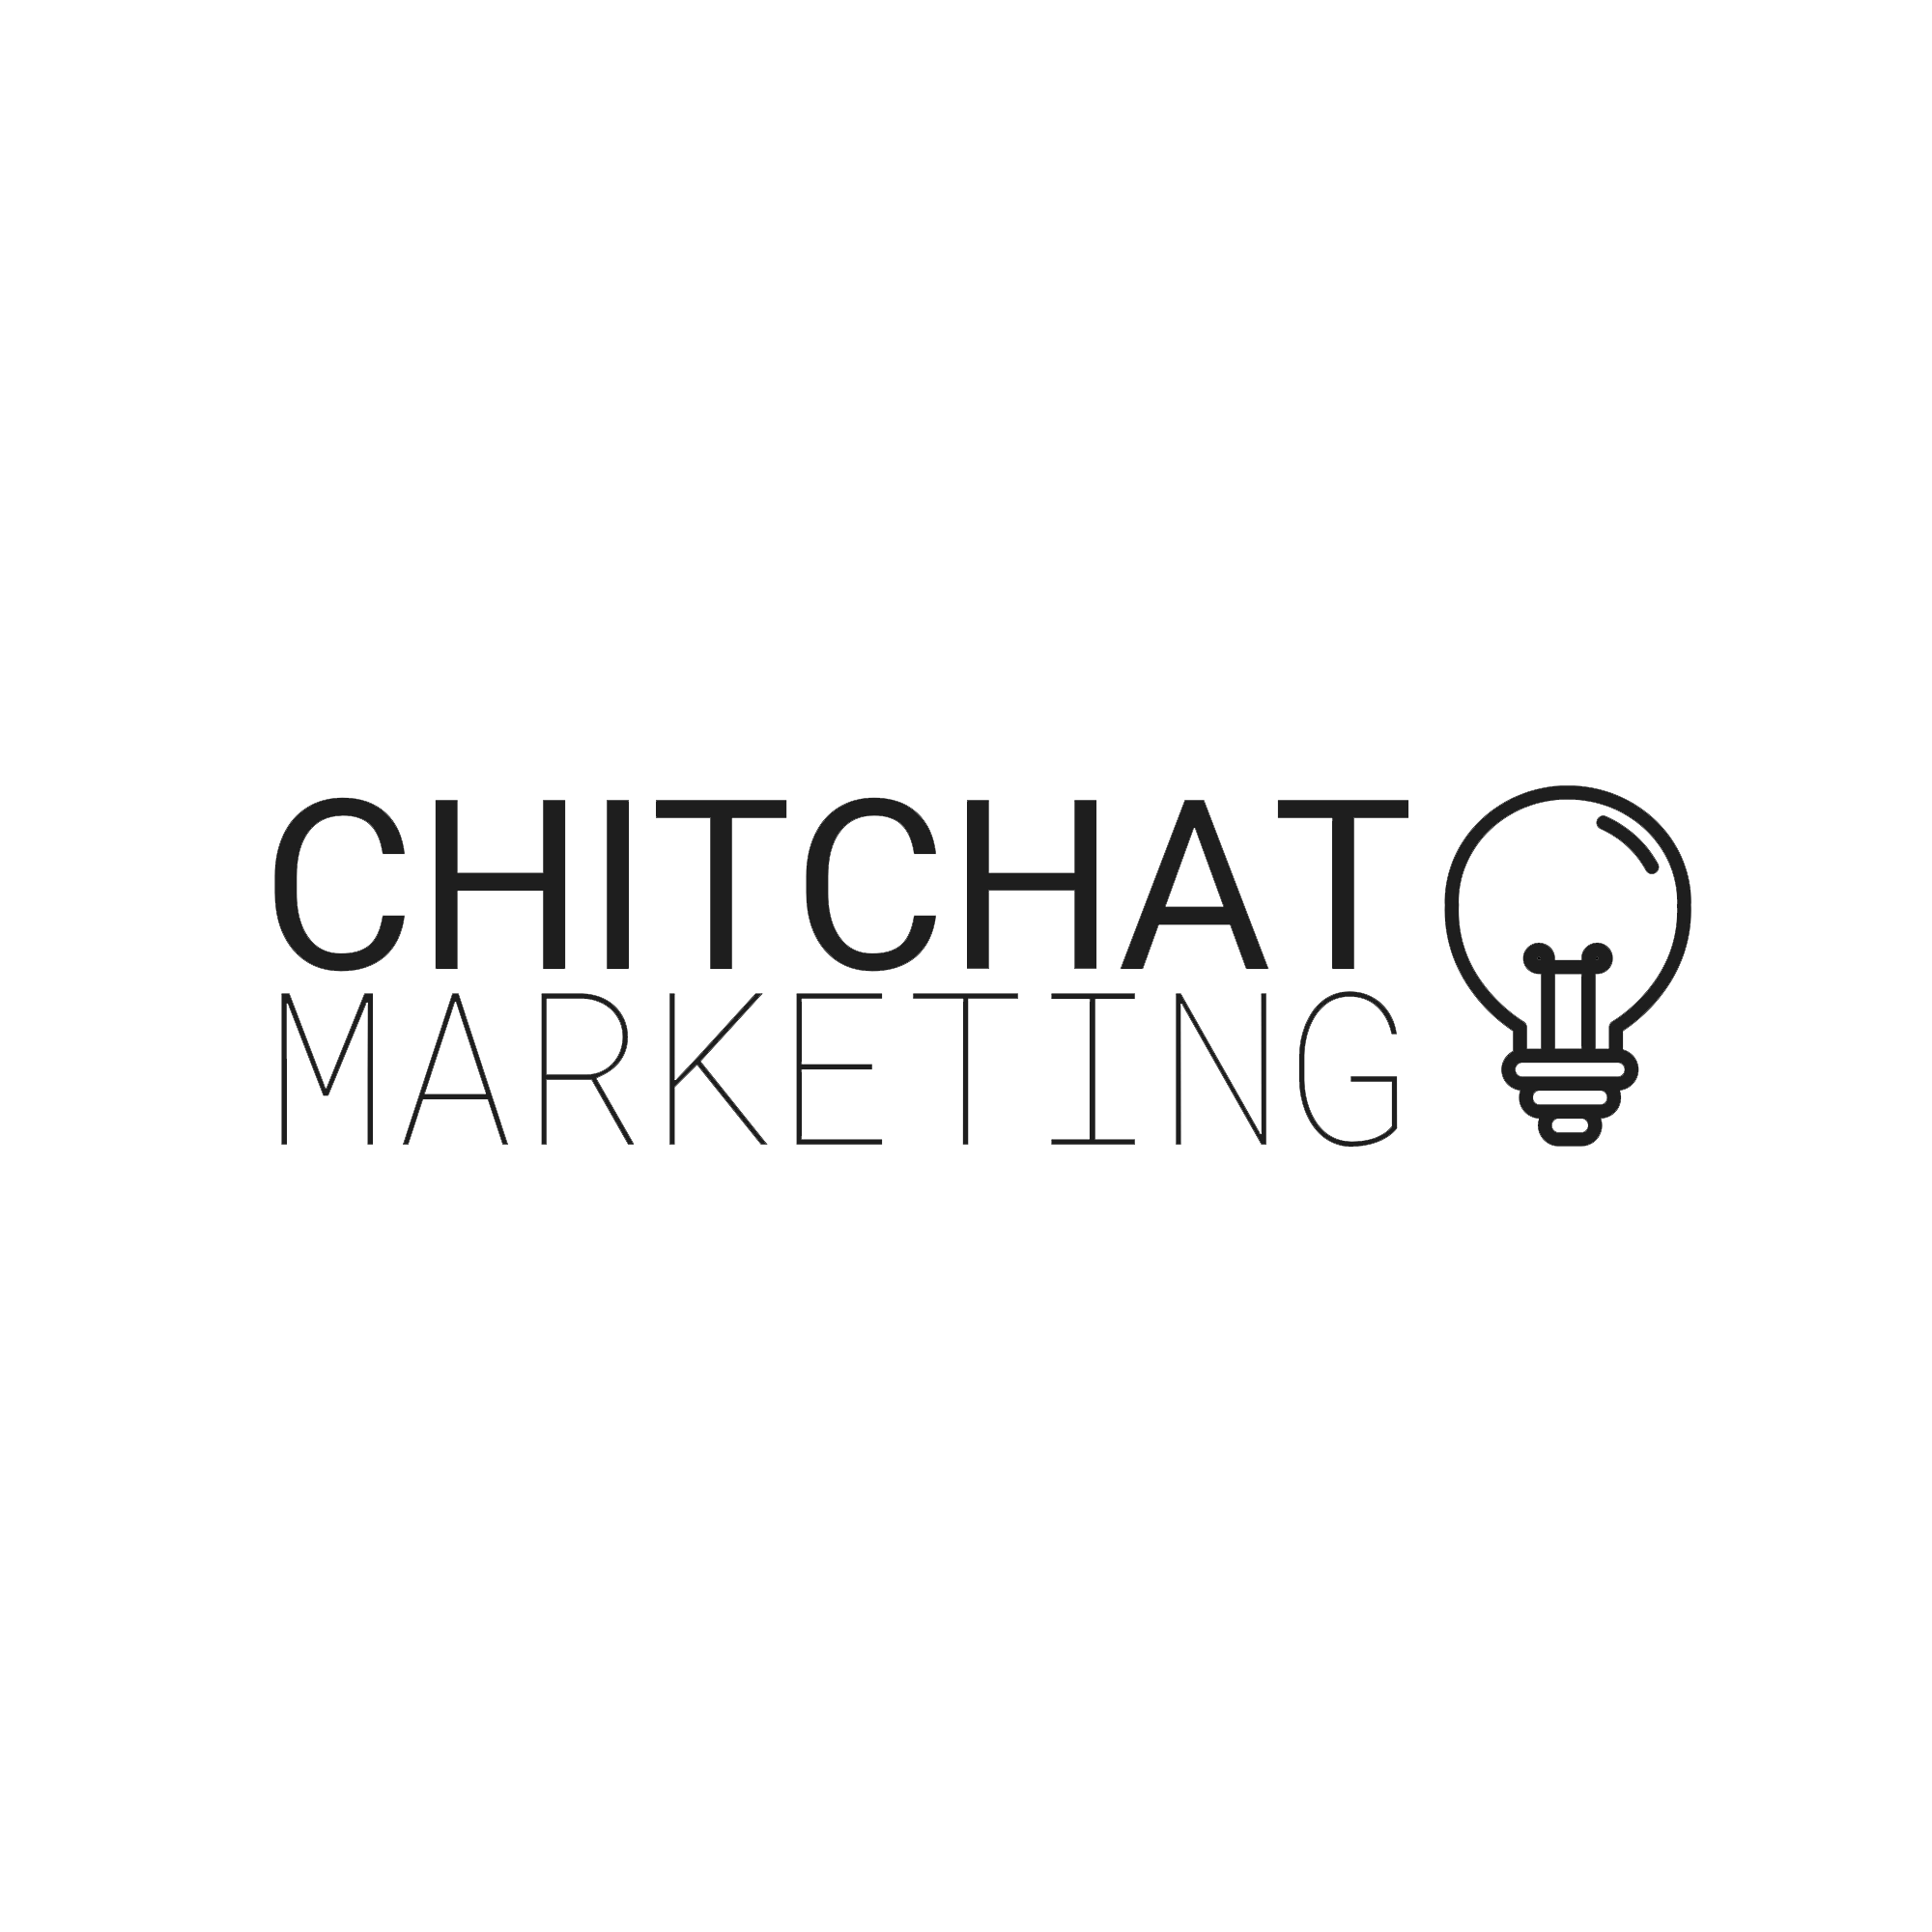 Chitchat marketing LLC Logo.png